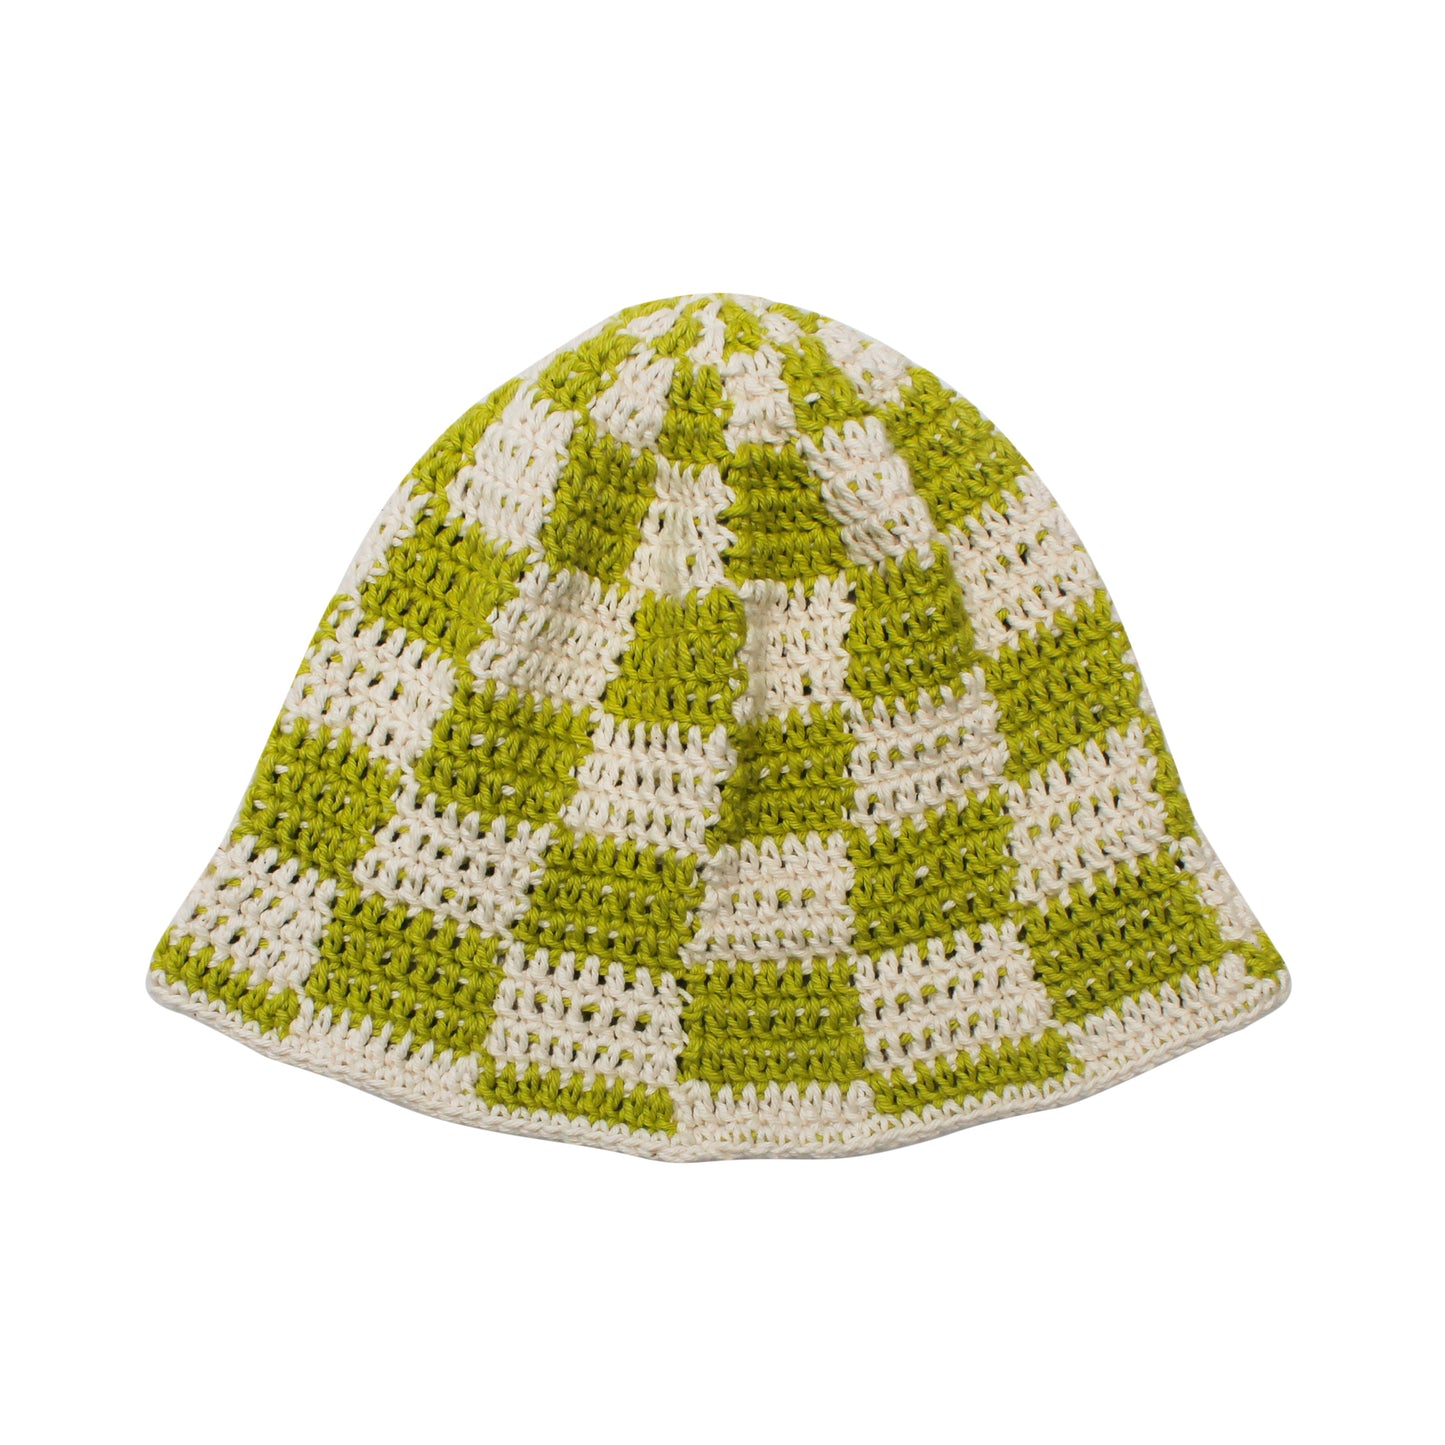 Sol Sol "Checkered" Crochet Hat - Green